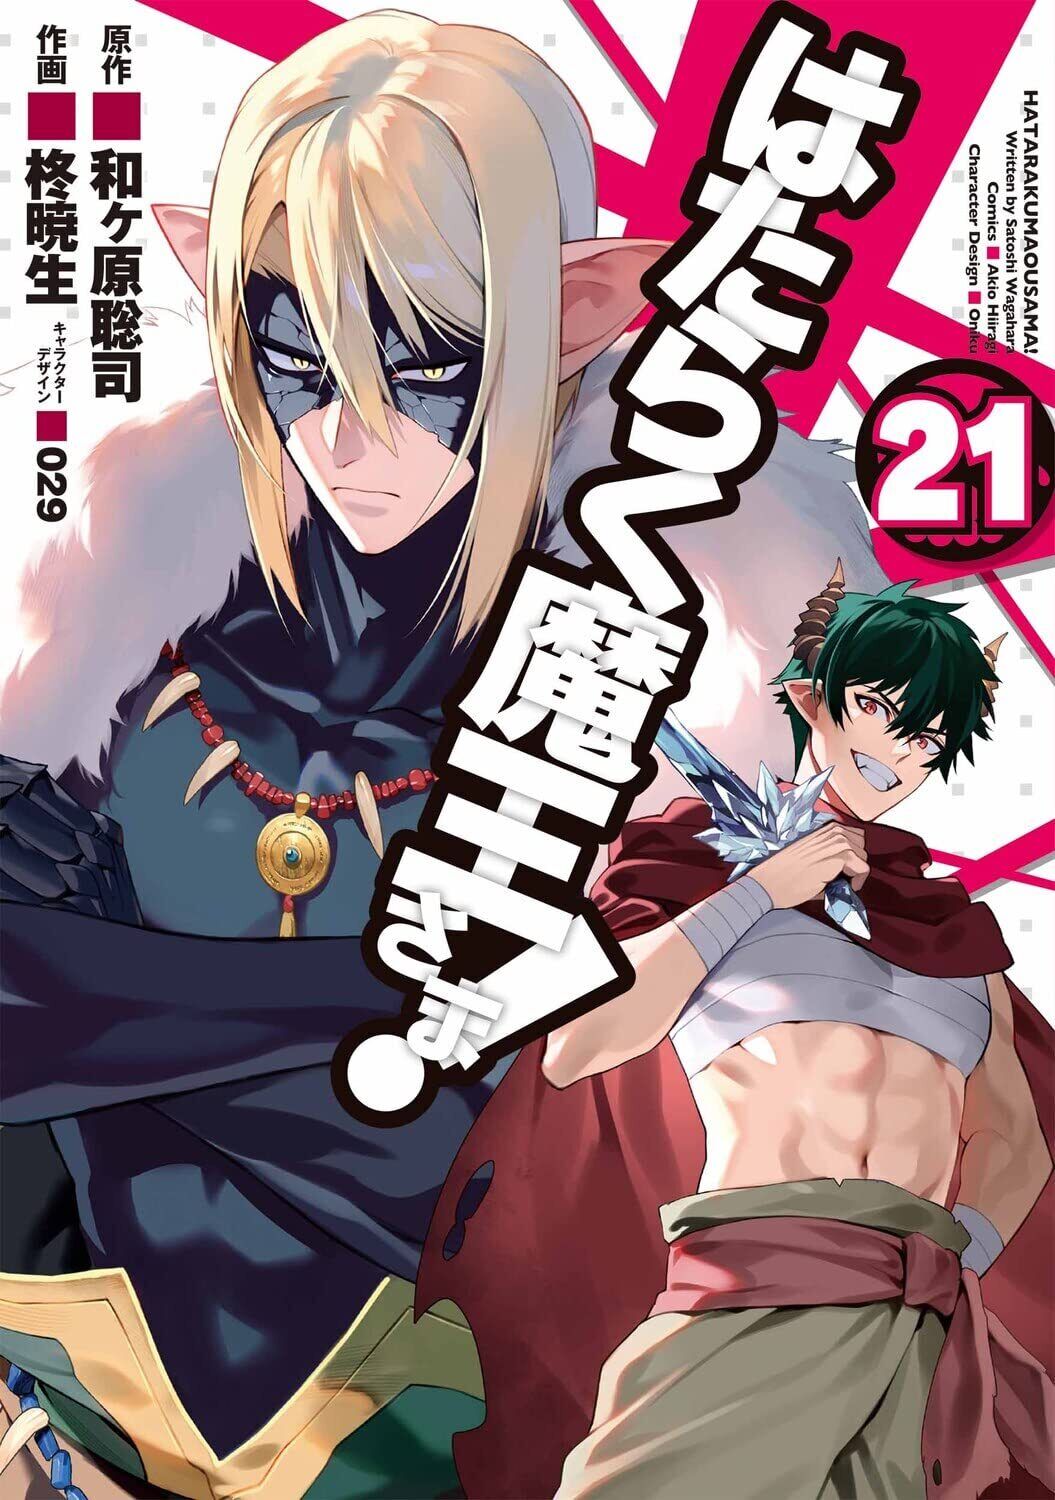 Hataraku Maoh-sama 21 comic Manga anime Satoshi Wagahara Japanese Book New